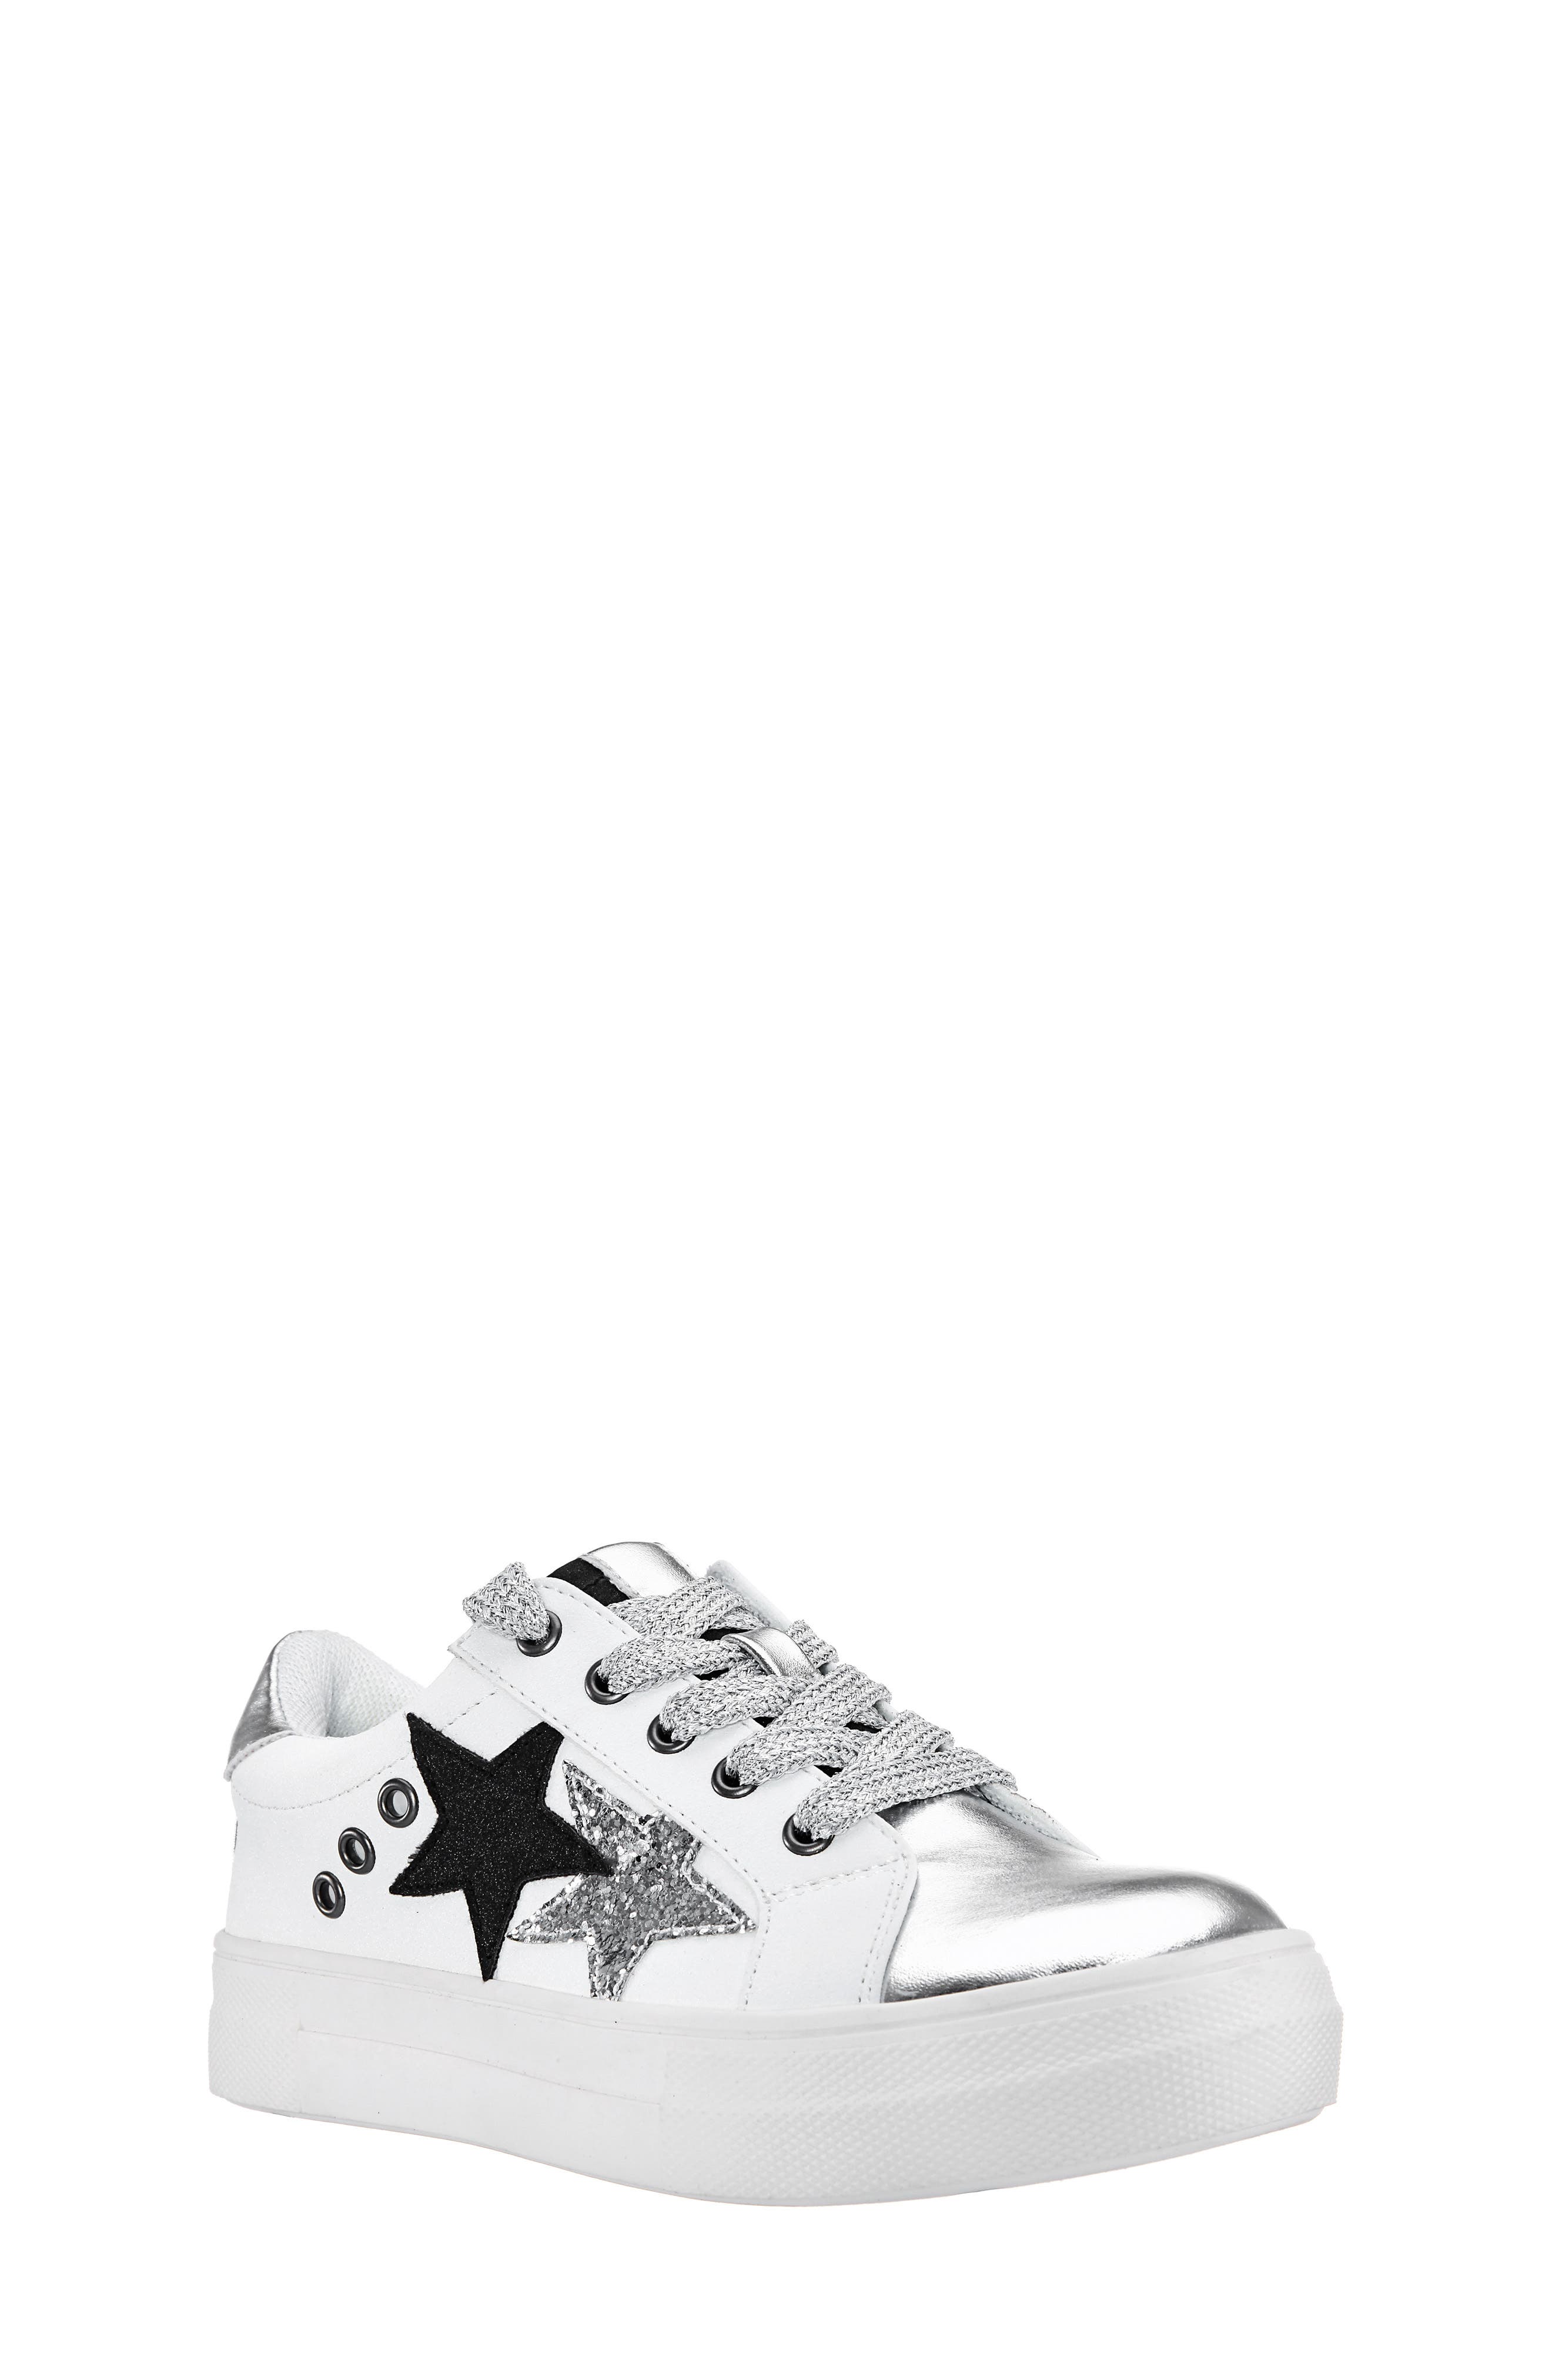 UPC 794378392989 product image for Girl's Nina Lizzet Glitter Star Sneaker, Size 3 M - White | upcitemdb.com